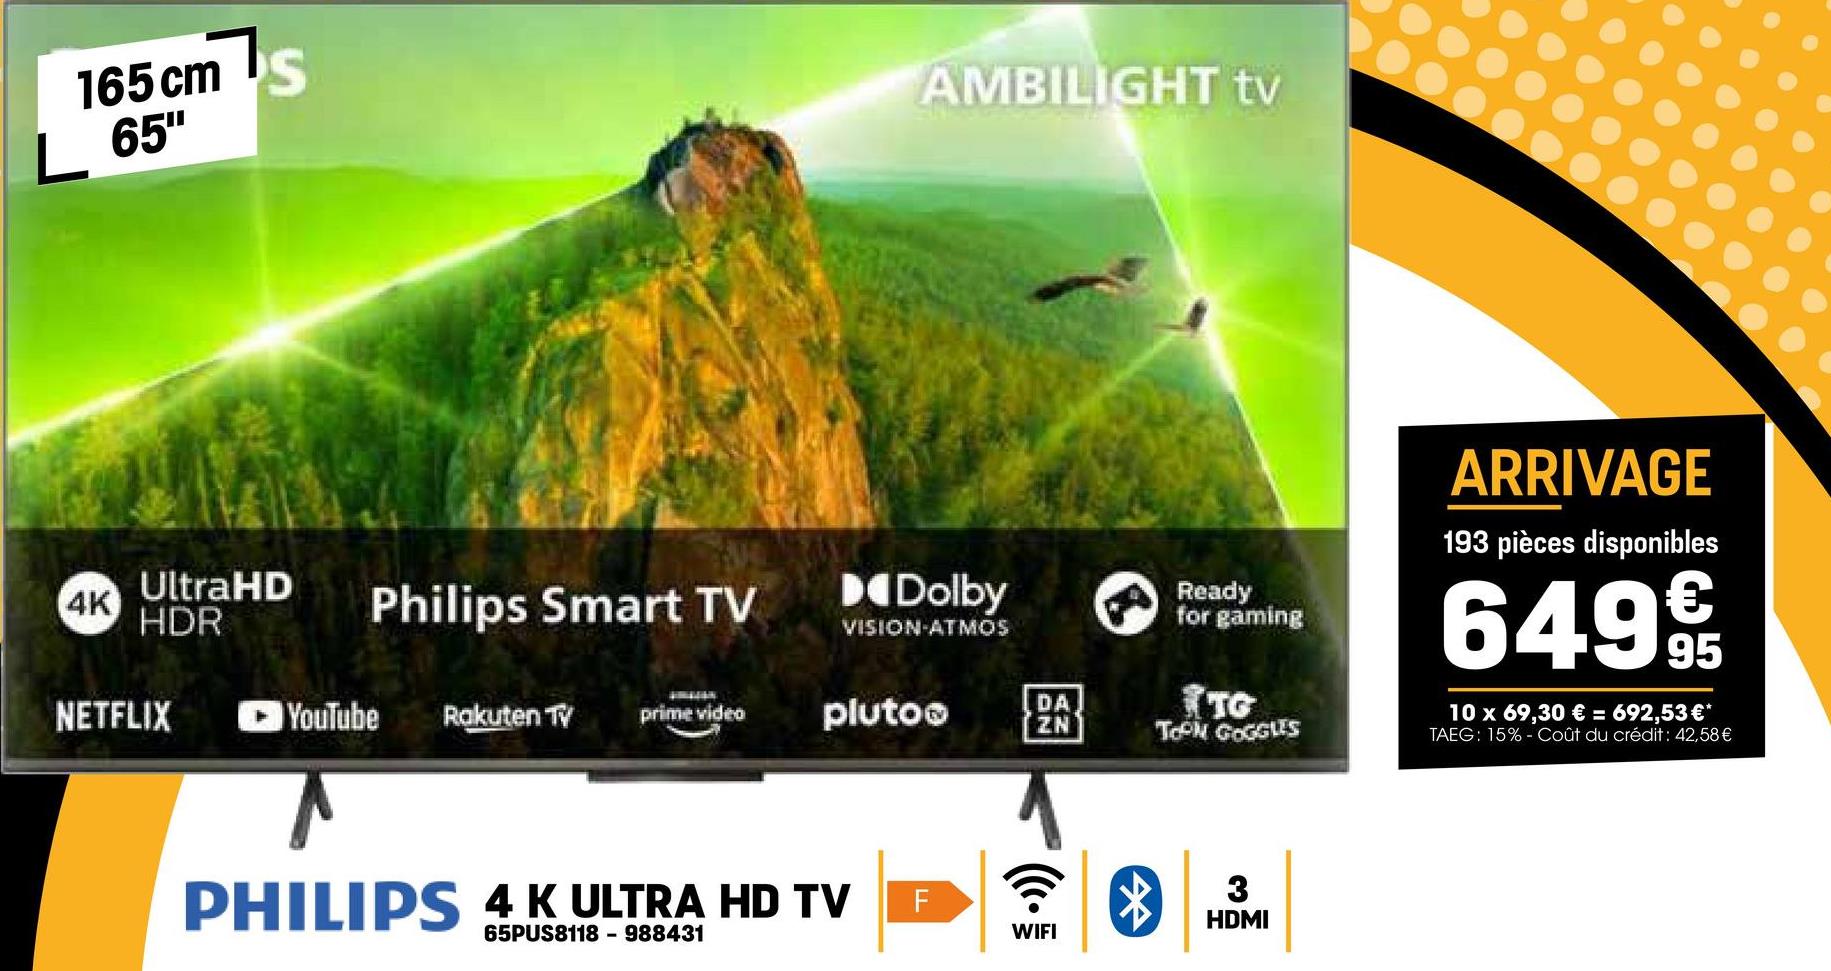 165 cm
65"
AMBILIGHT tv
Ready
for gaming
ARRIVAGE
193 pièces disponibles
649 9
10 x 69,30 € = 692,53 €*
TAEG: 15% - Coût du crédit : 42,58 €
4K
UltraHD
HDR
Dolby
Philips Smart TV
VISION-ATMOS
NETFLIX
YouTube Rakuten TV
prime video
plutoo
DA
ZN
TG
TOPM GOGGLES
PHILIPS 4 K ULTRA HD TV
65PUS8118 - 988431
F
*
m
HDMI
WIFI